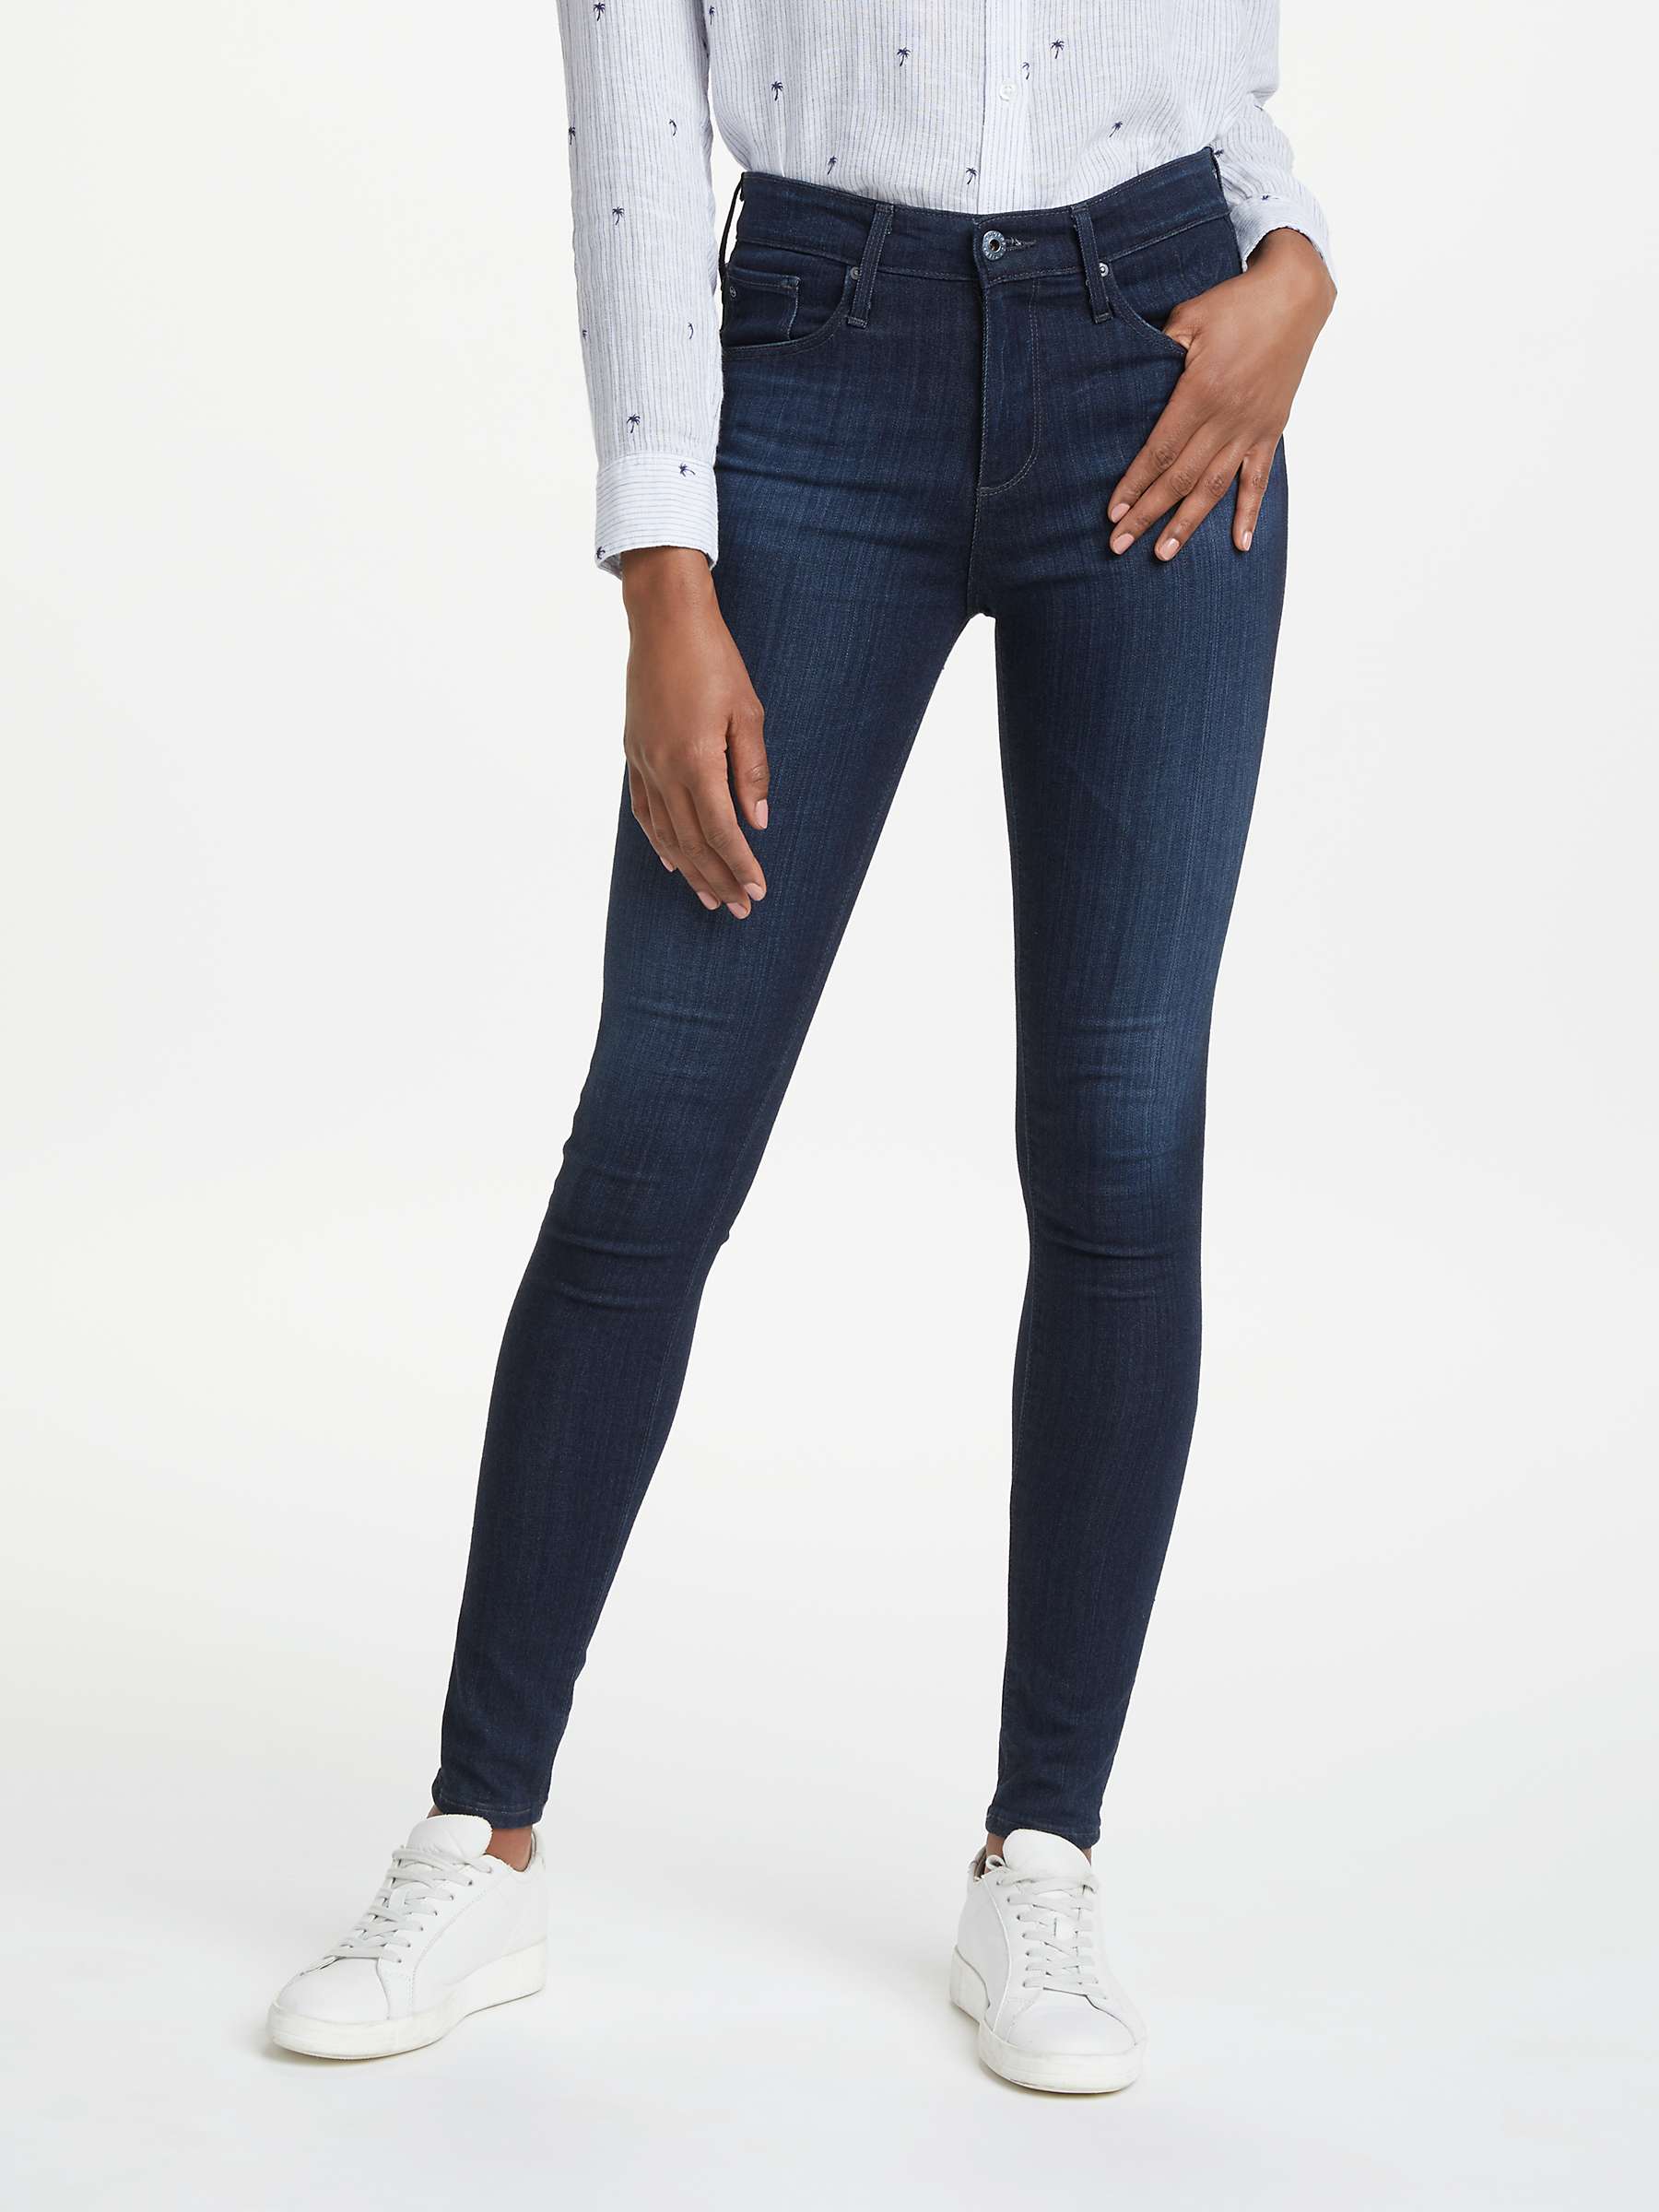 Buy AG The Farrah High Rise Skinny Jeans, Brooks Online at johnlewis.com